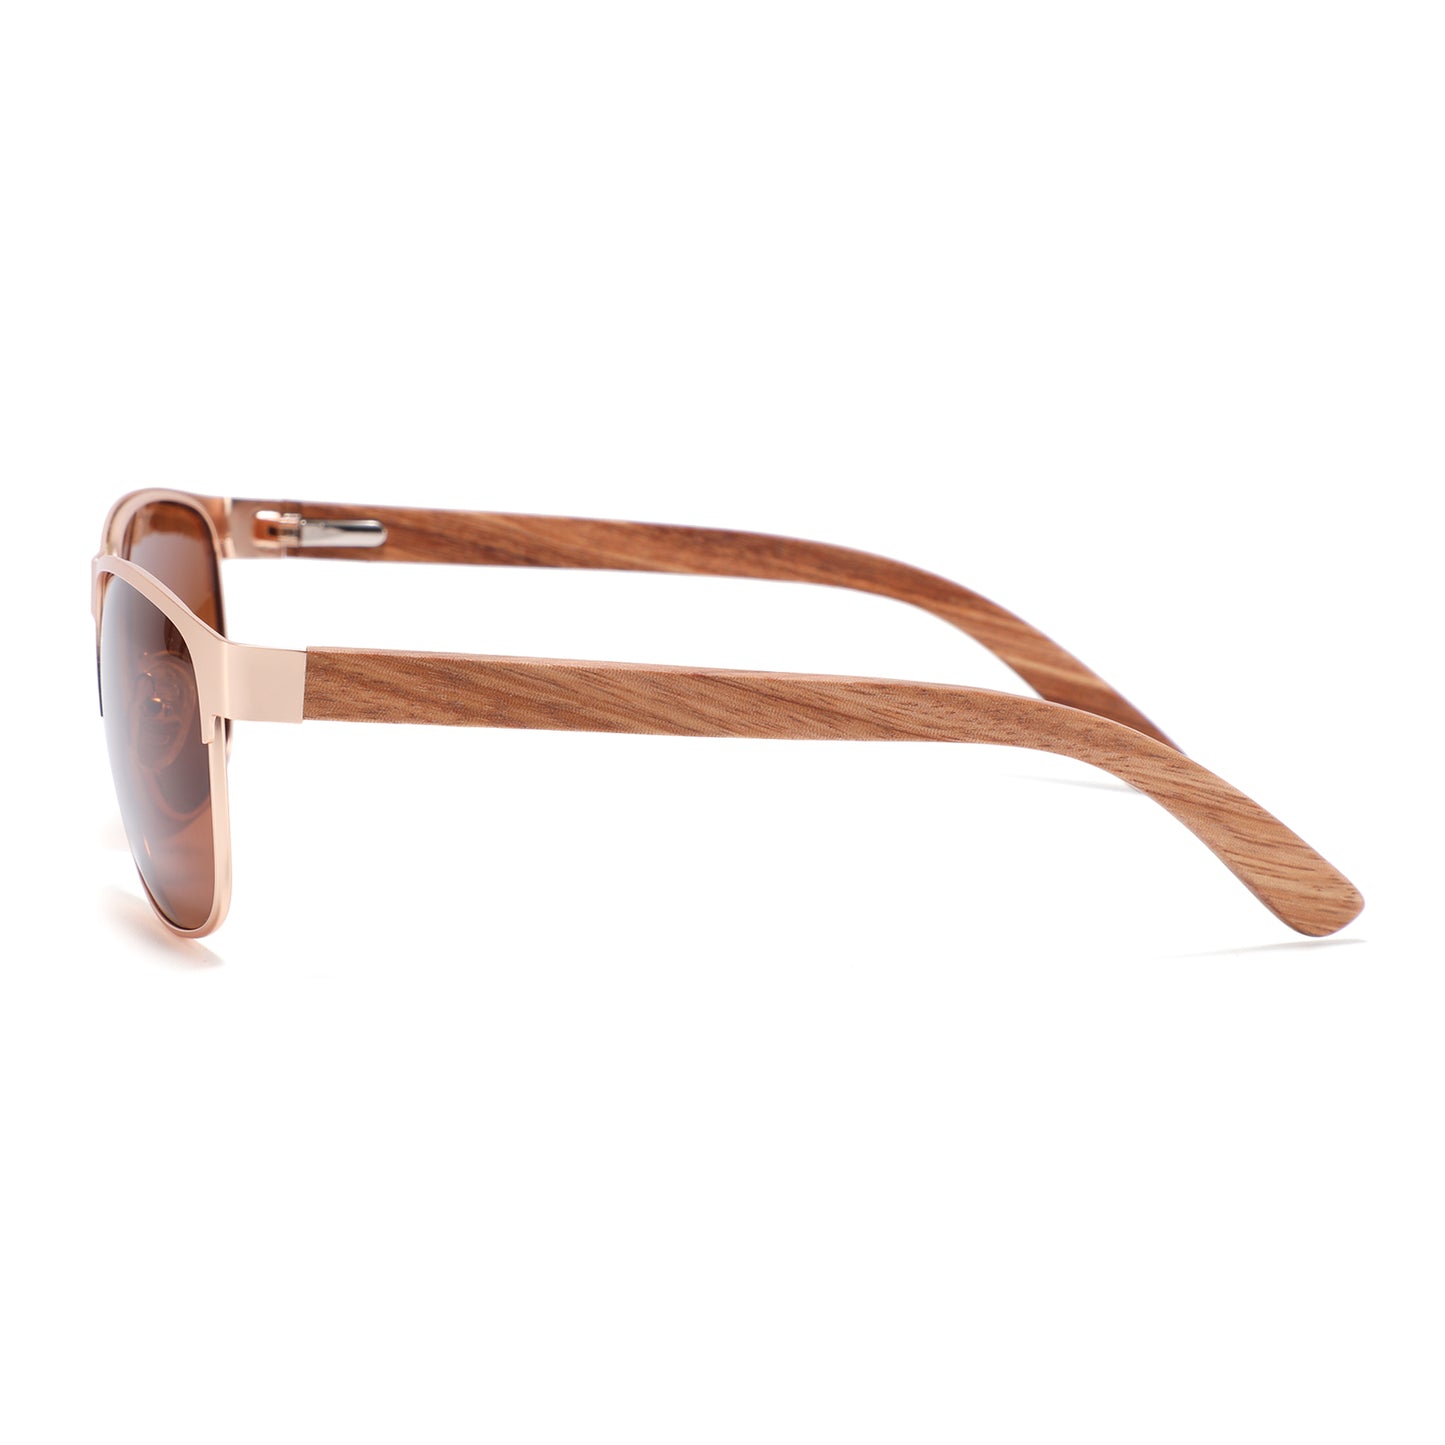 HOLLYWOOD BROWN Men's Metallic Sunglasses Polarised Lens Wooden Arms